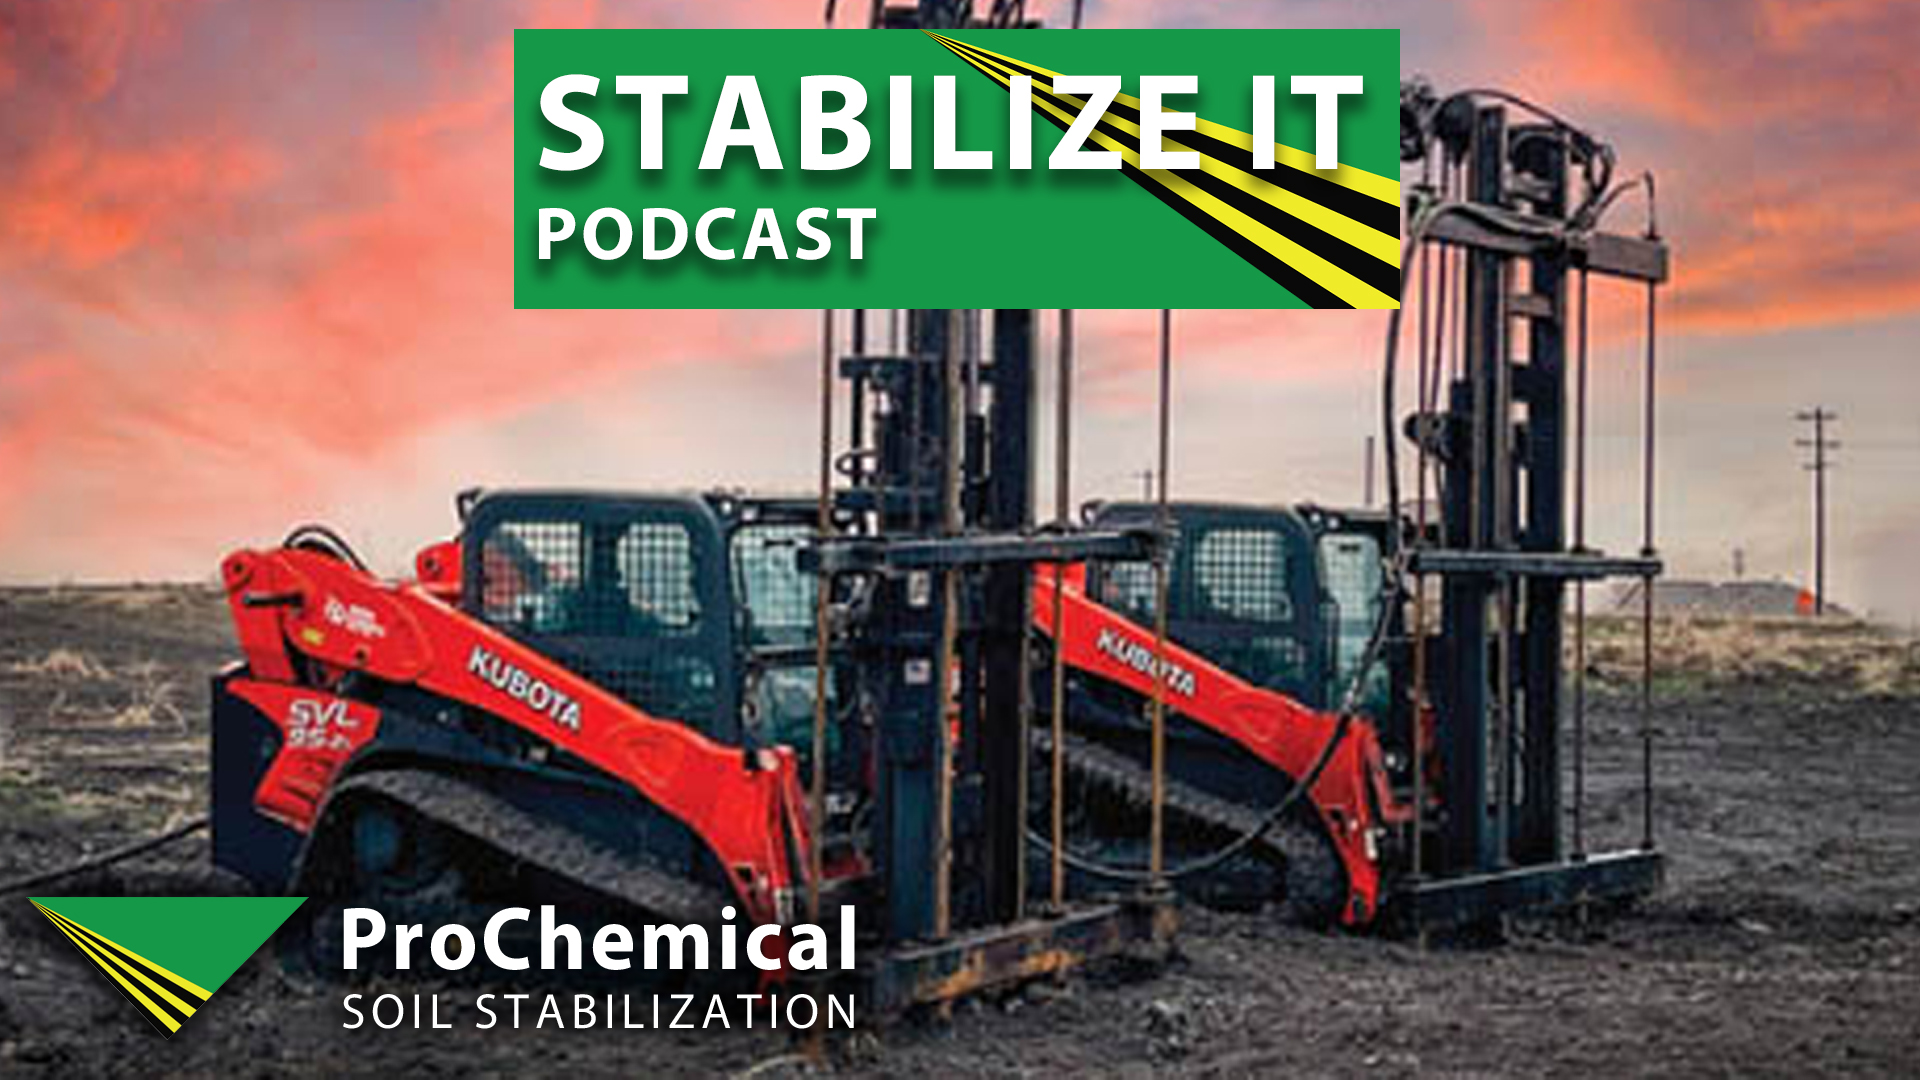 Stabilize It Podcast - ProChemical Soil Stabilization